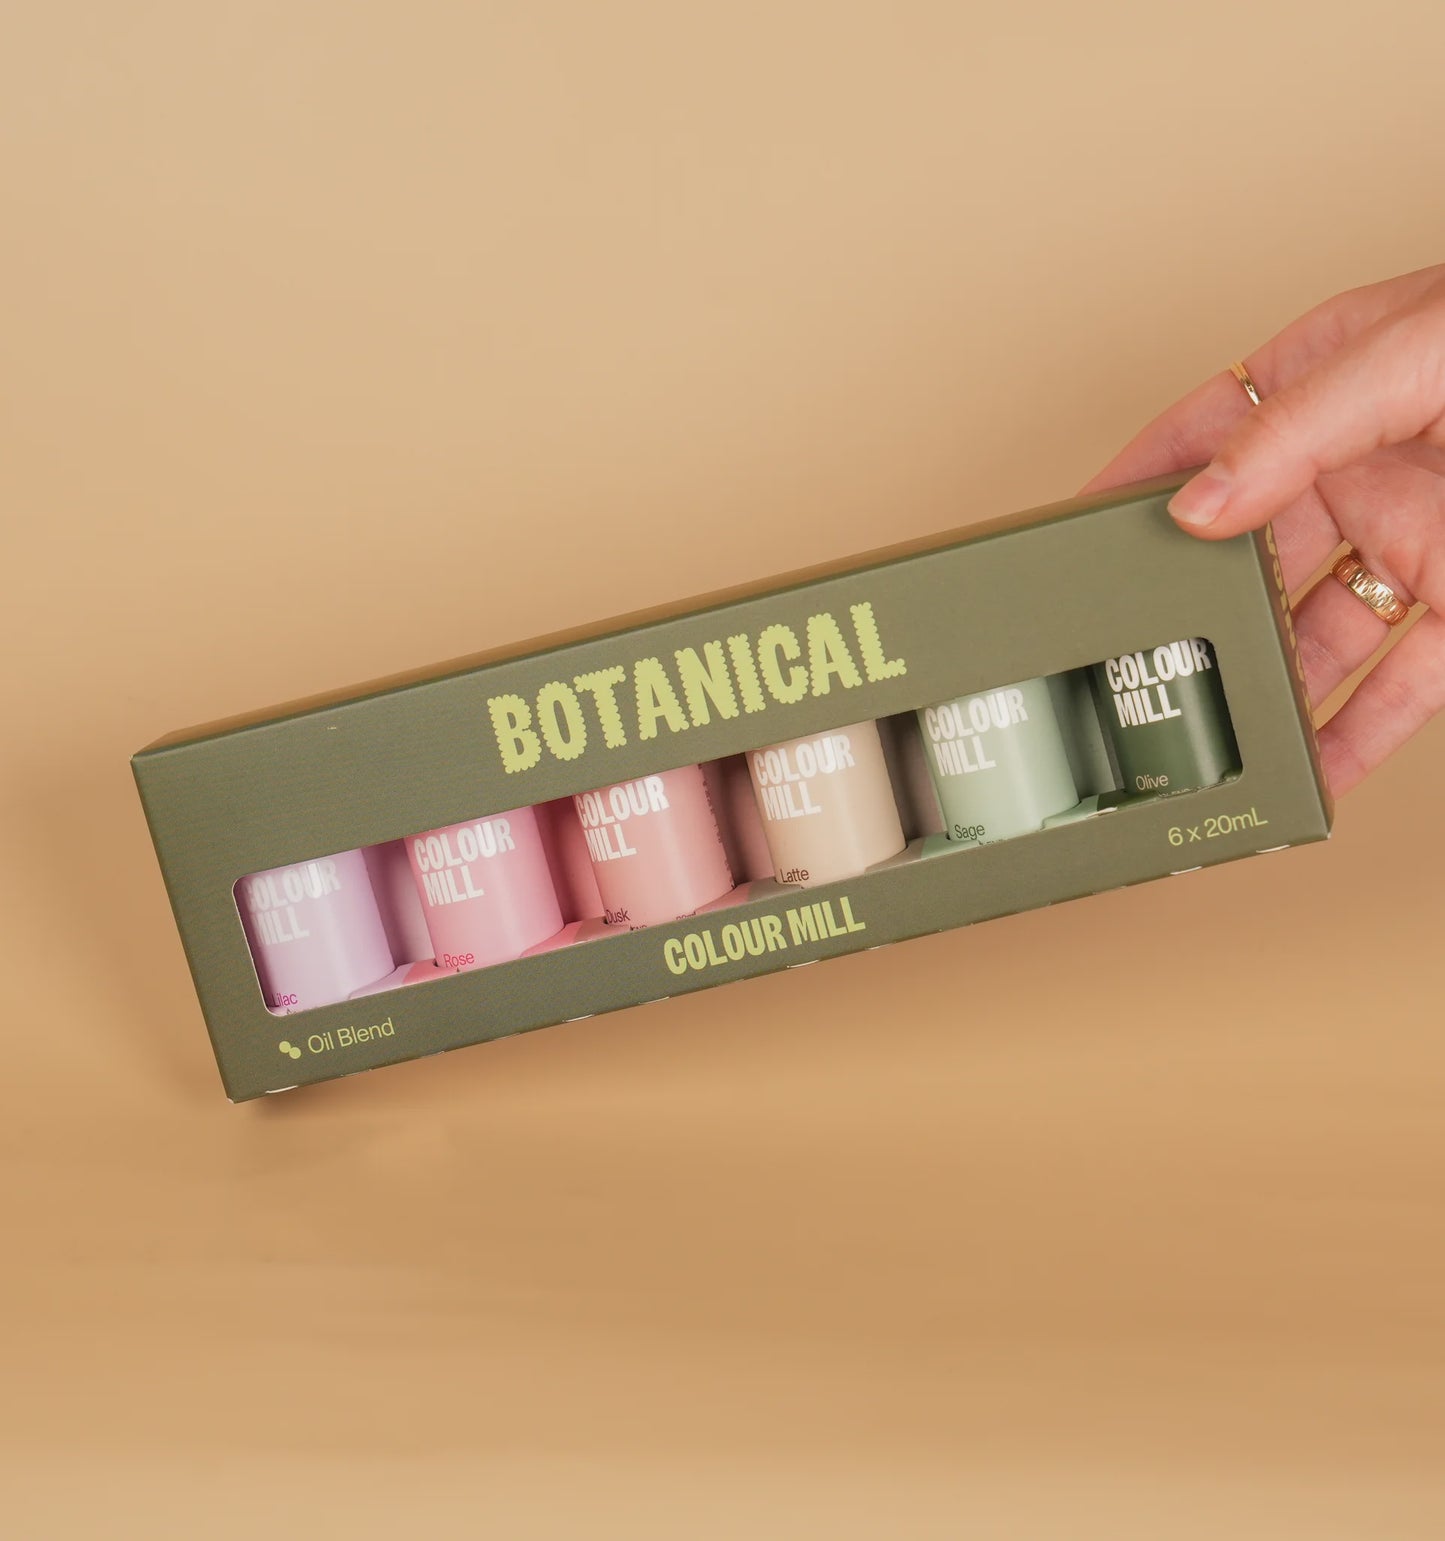 Botanical Set, Colour Mill Oil Based Coloring